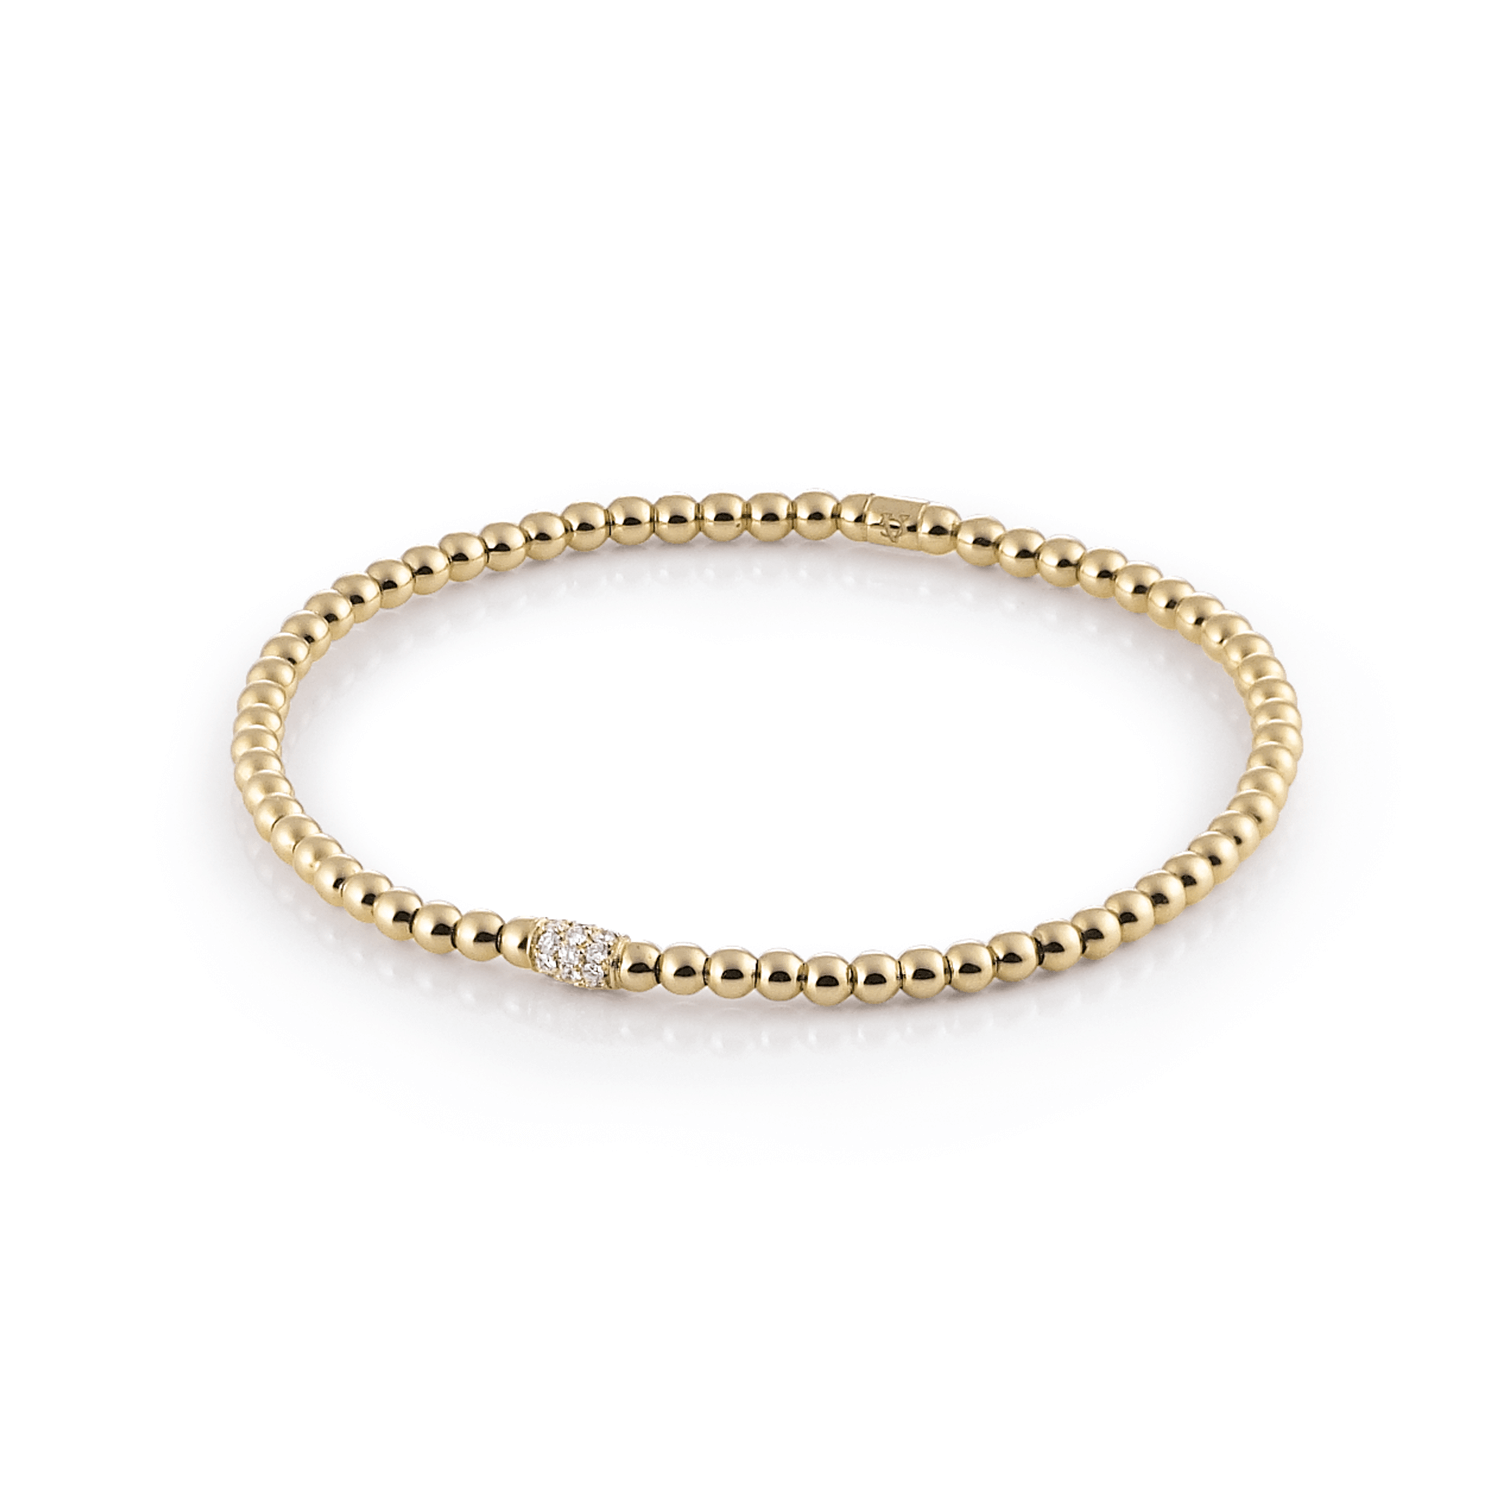 Al Coro Stretchy Bracelet in 18k Rose Gold with Diamonds - Orsini Jewellers NZ